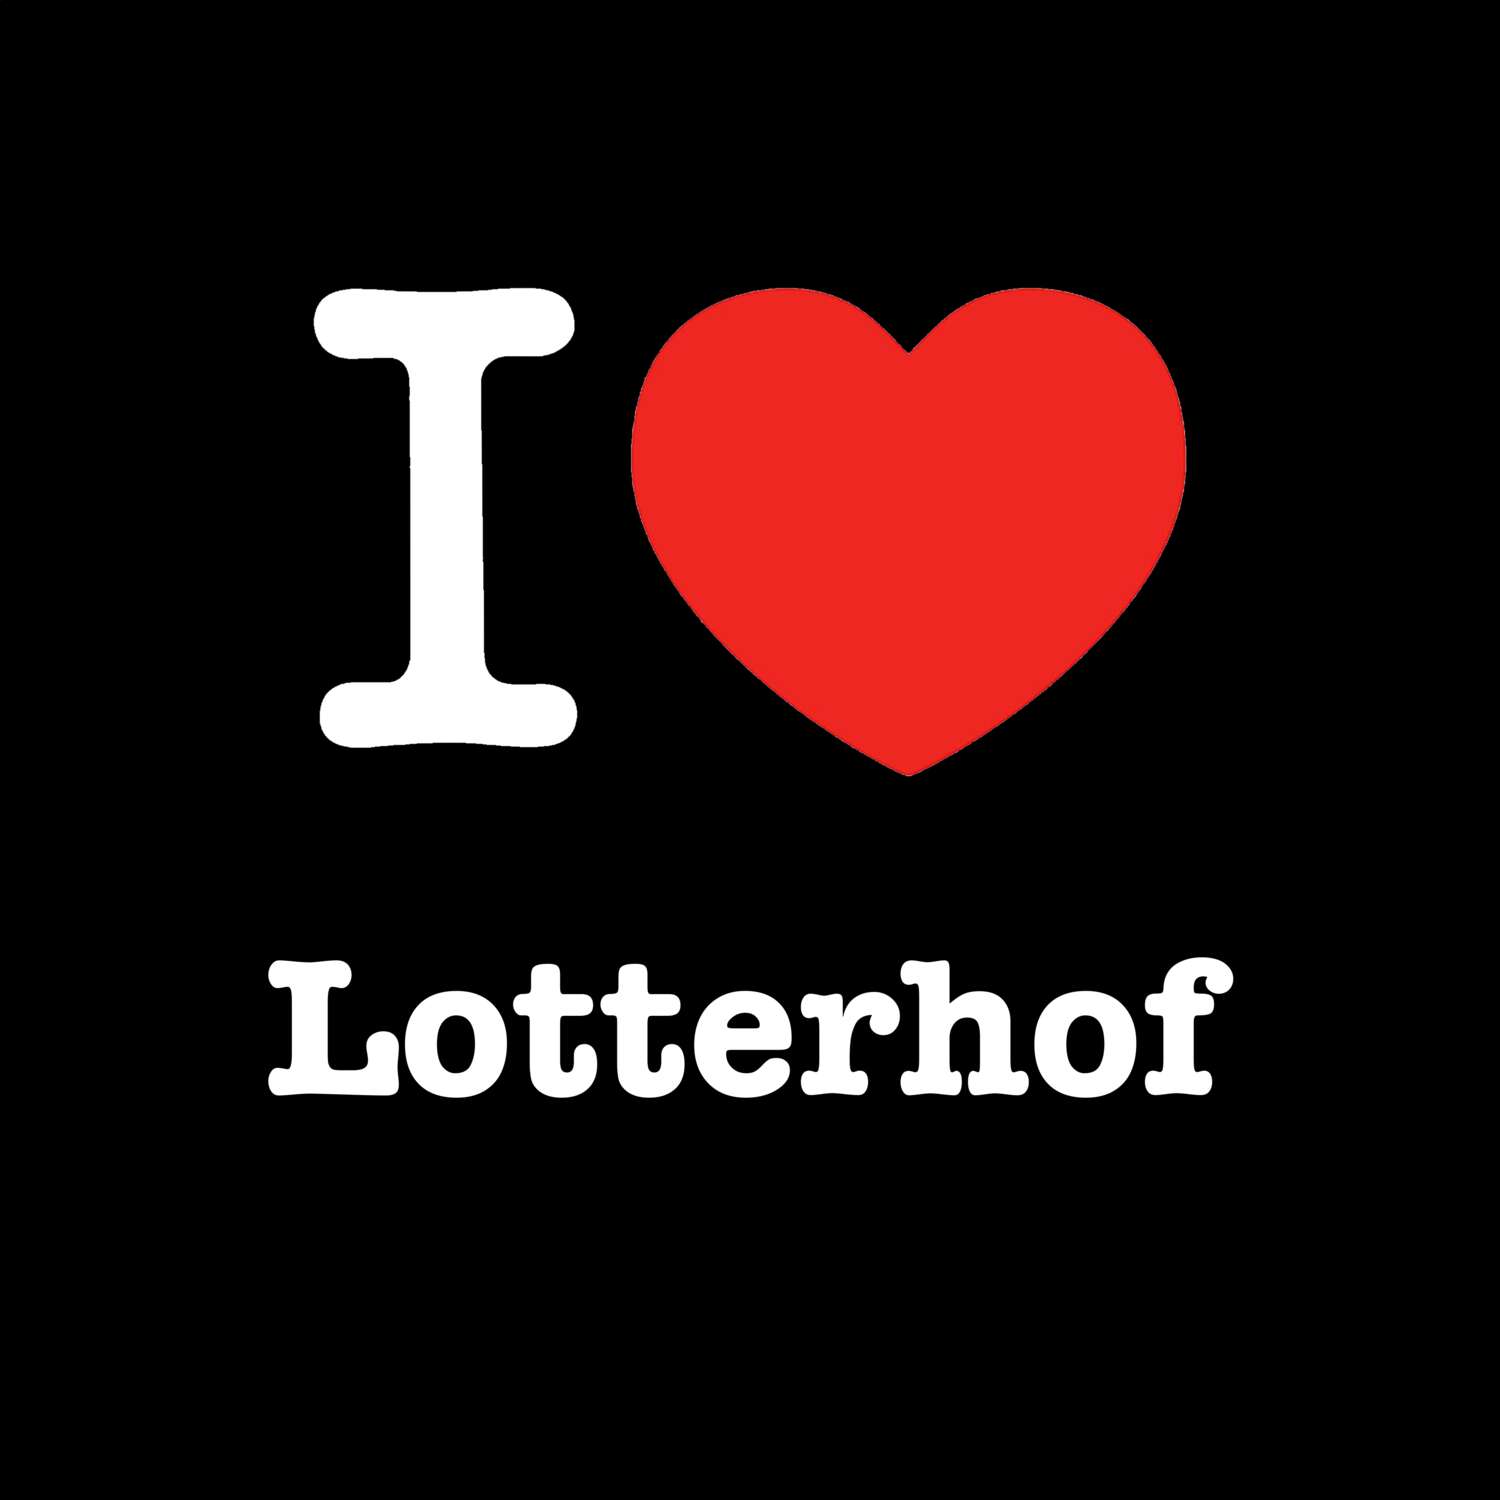 Lotterhof T-Shirt »I love«